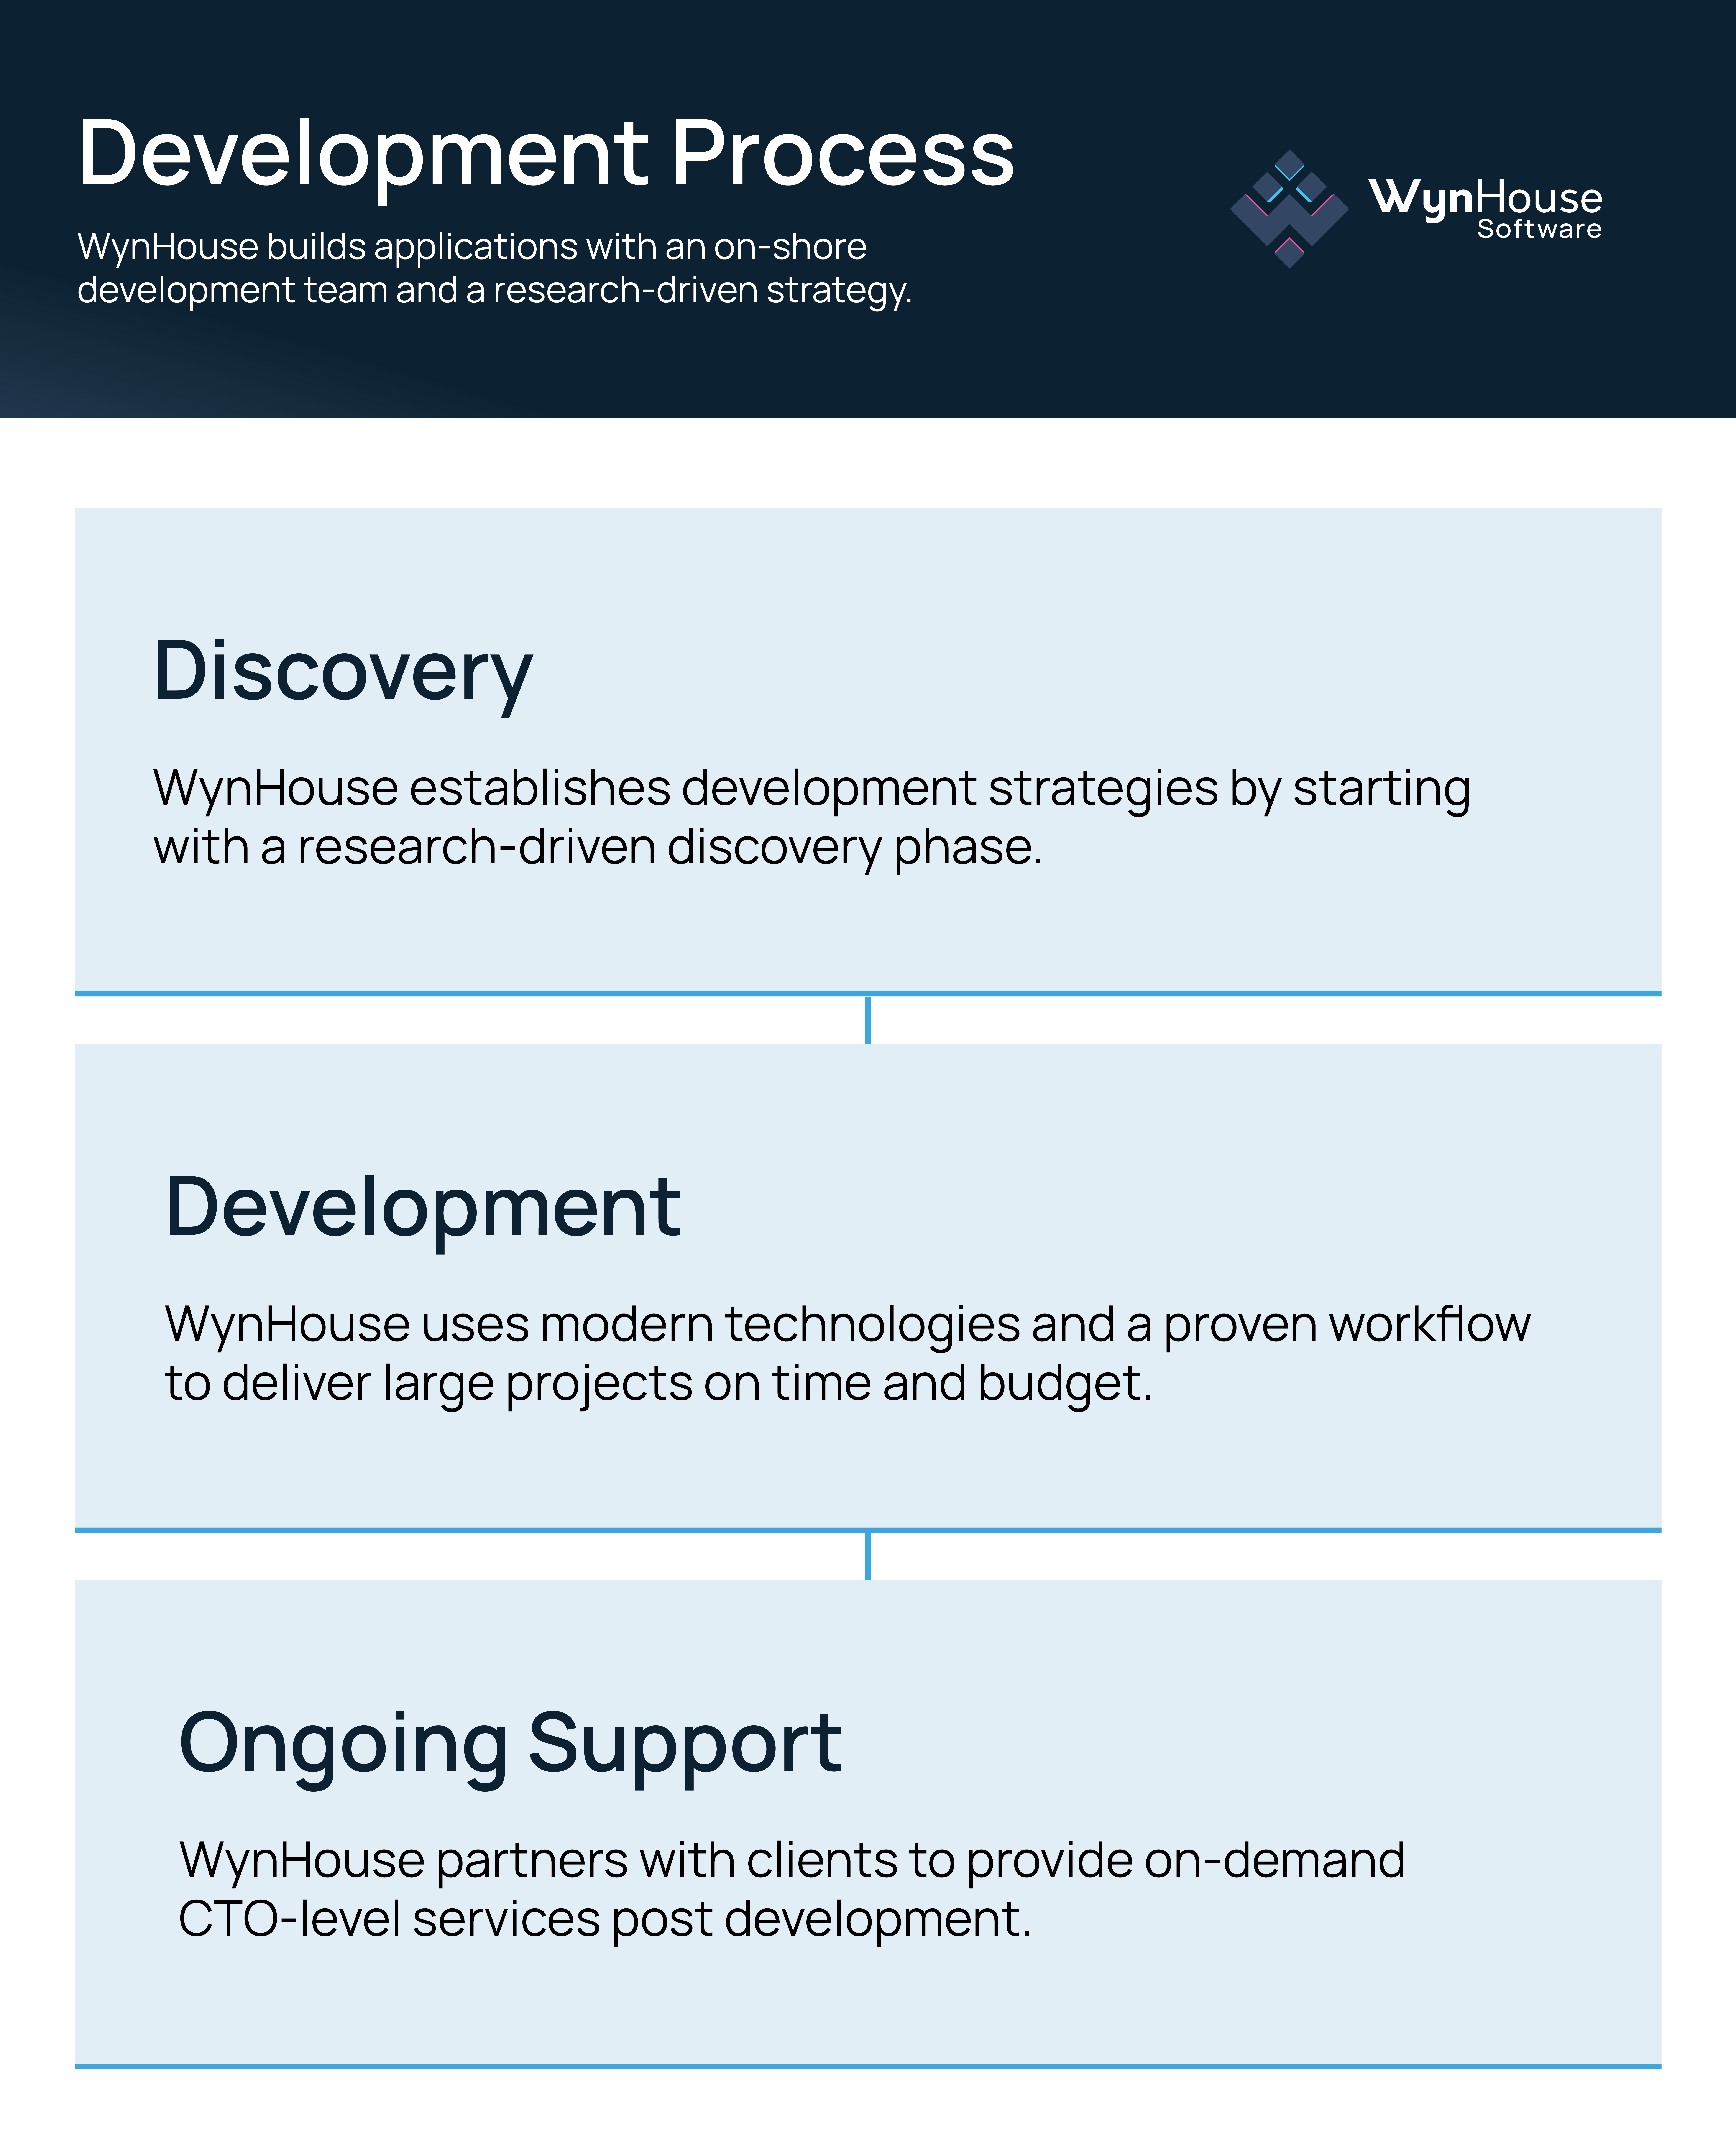 Development Process Graphic